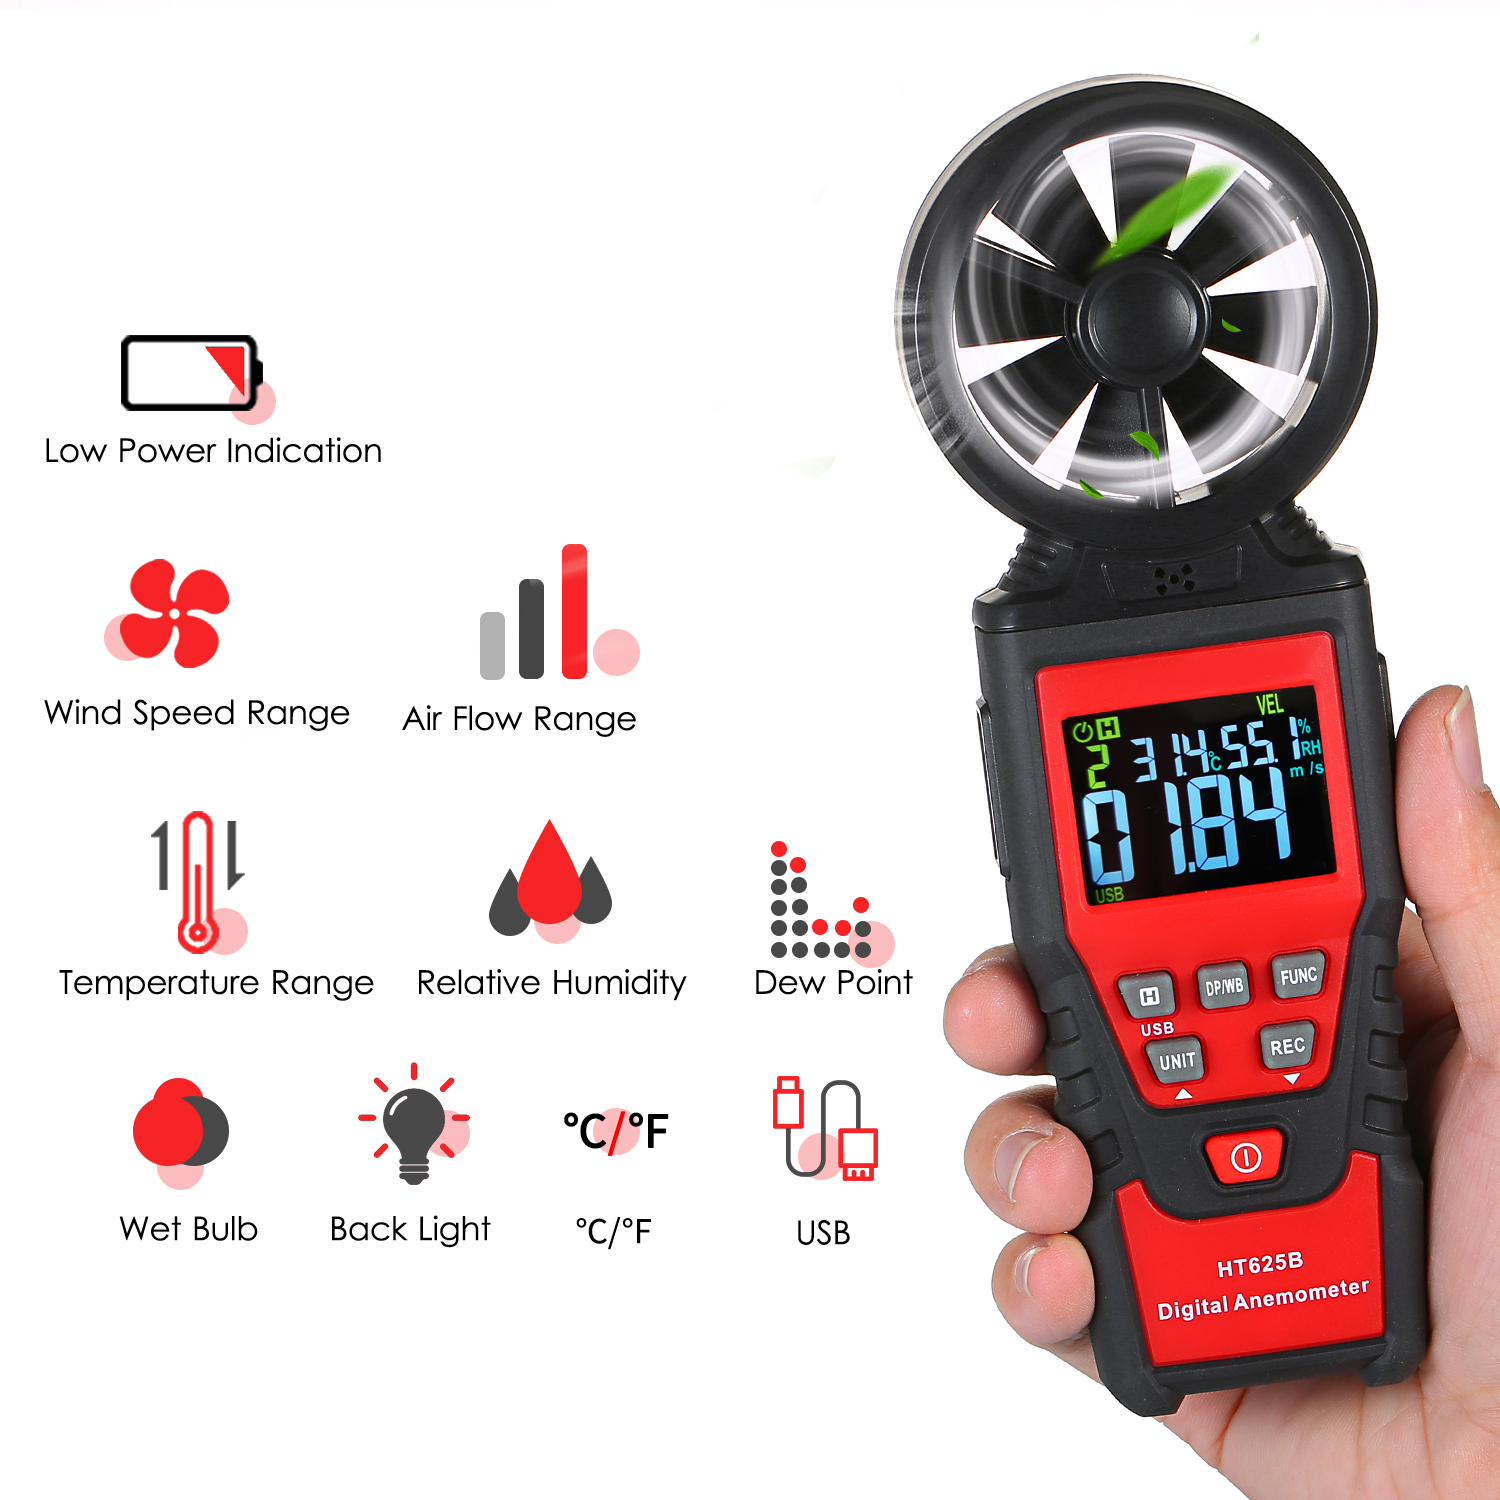 Handheld Anemometer Digital Wind Speed Meter with USB, LCD Color Display Measures Wind Speed Humidity Temperature 3